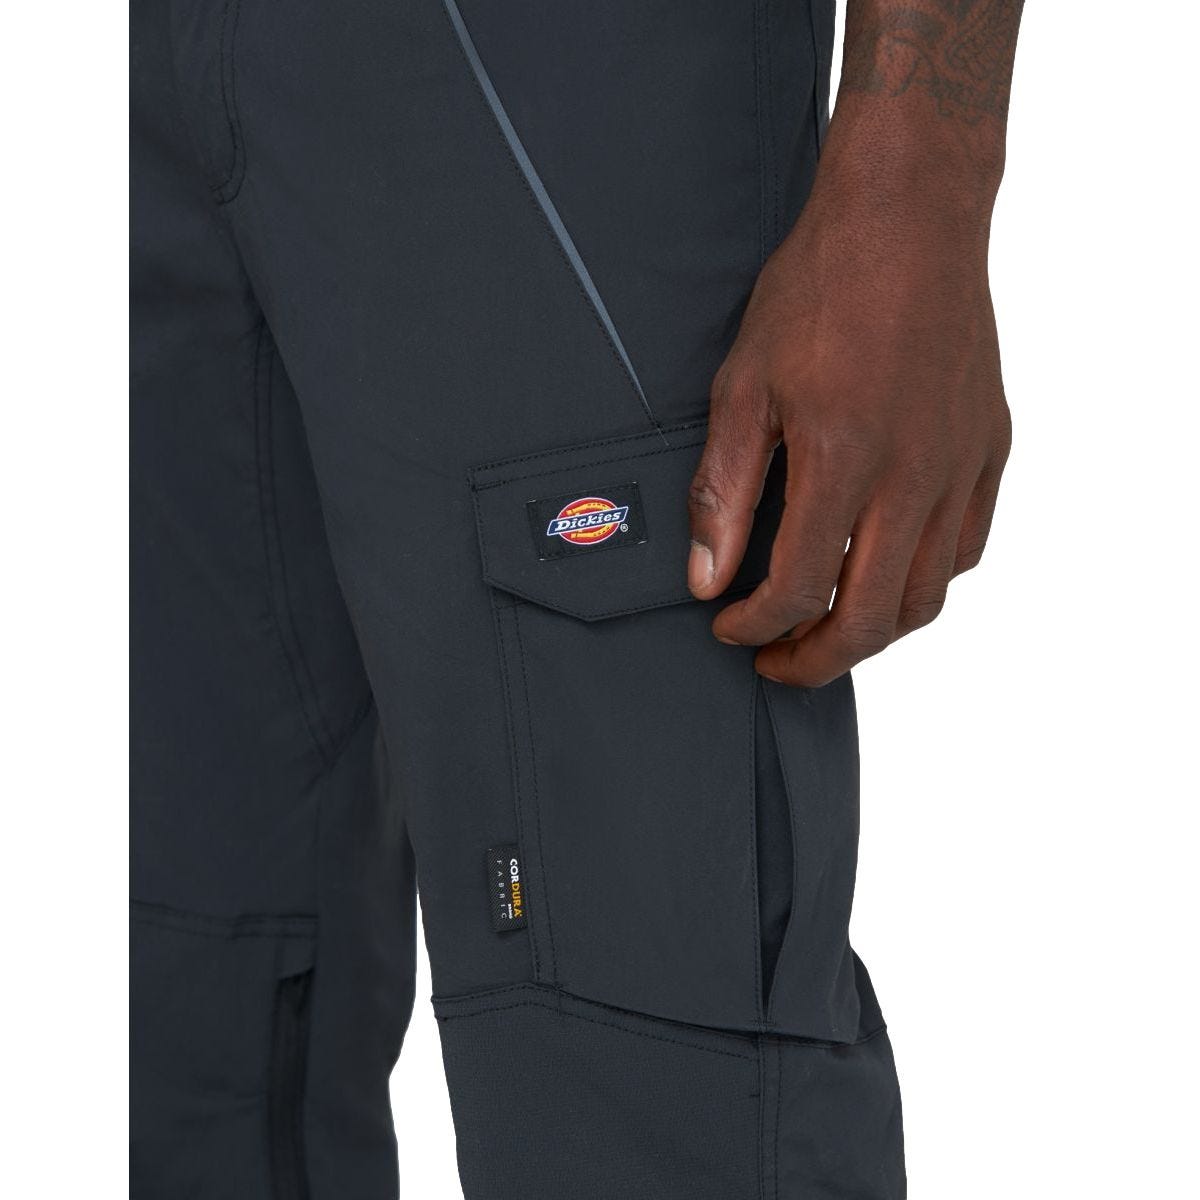 Pantalon léger Flex Noir - Dickies - Taille 48 4